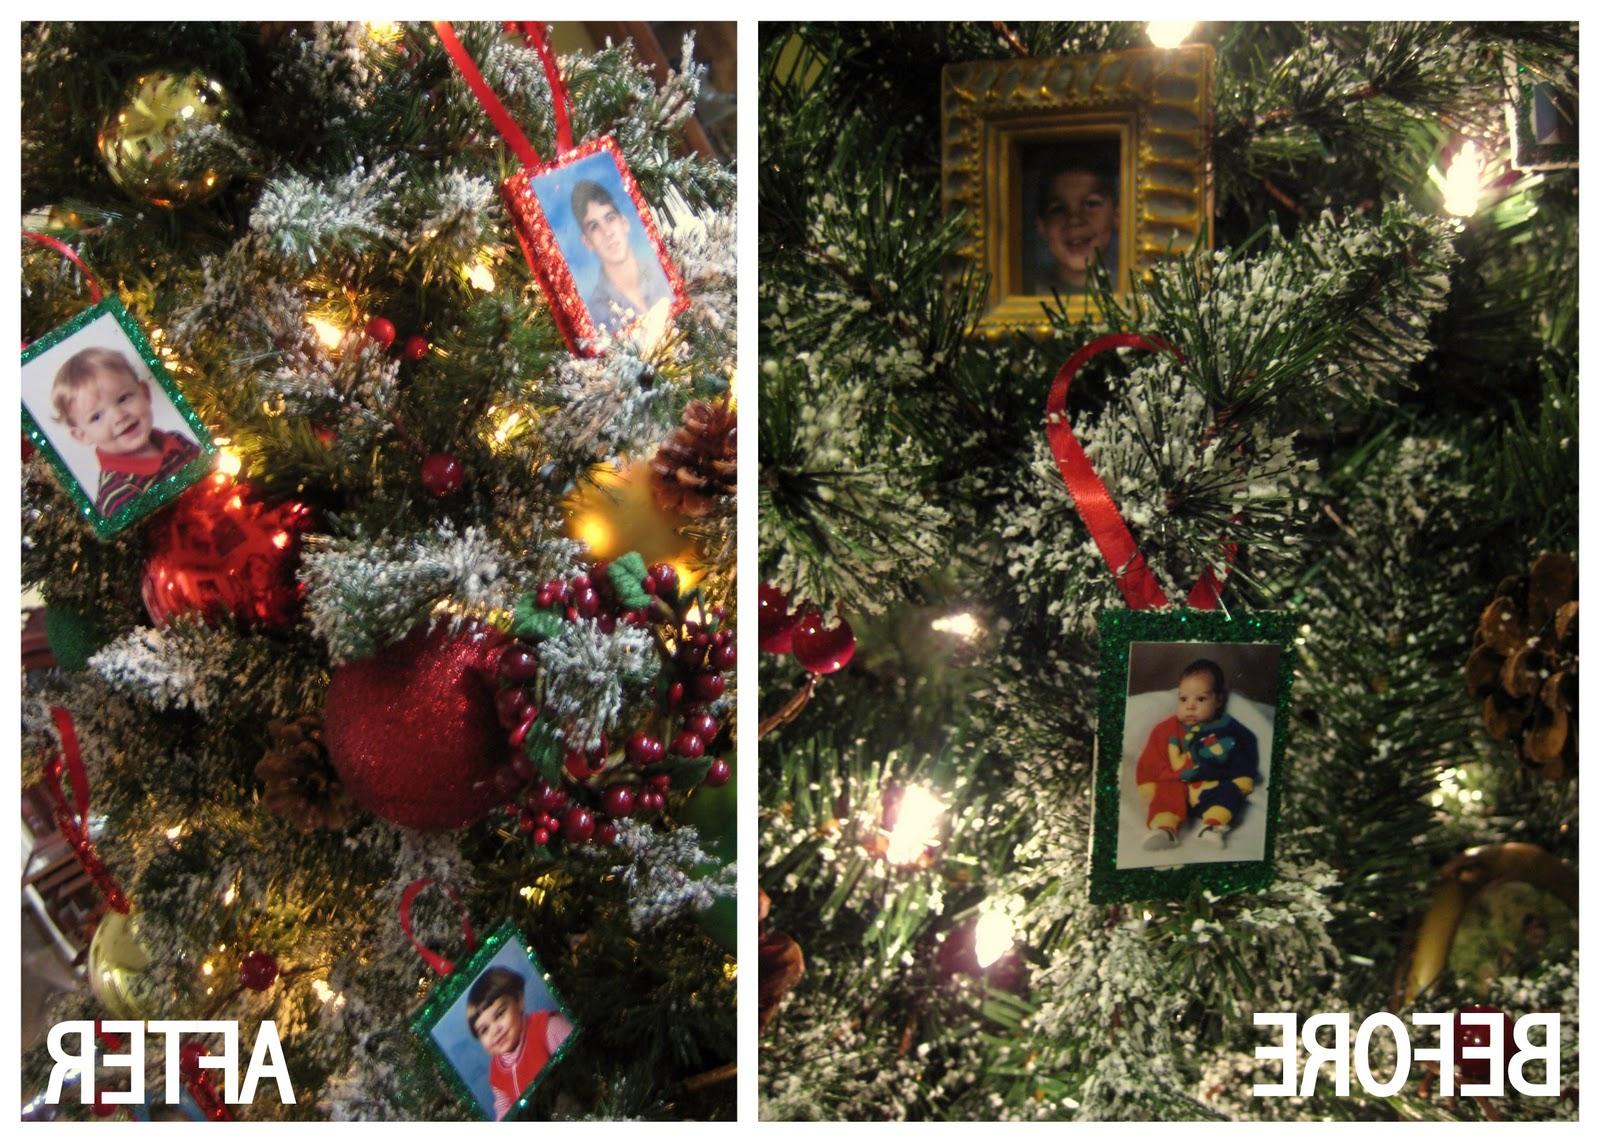 themed Christmas Tree: